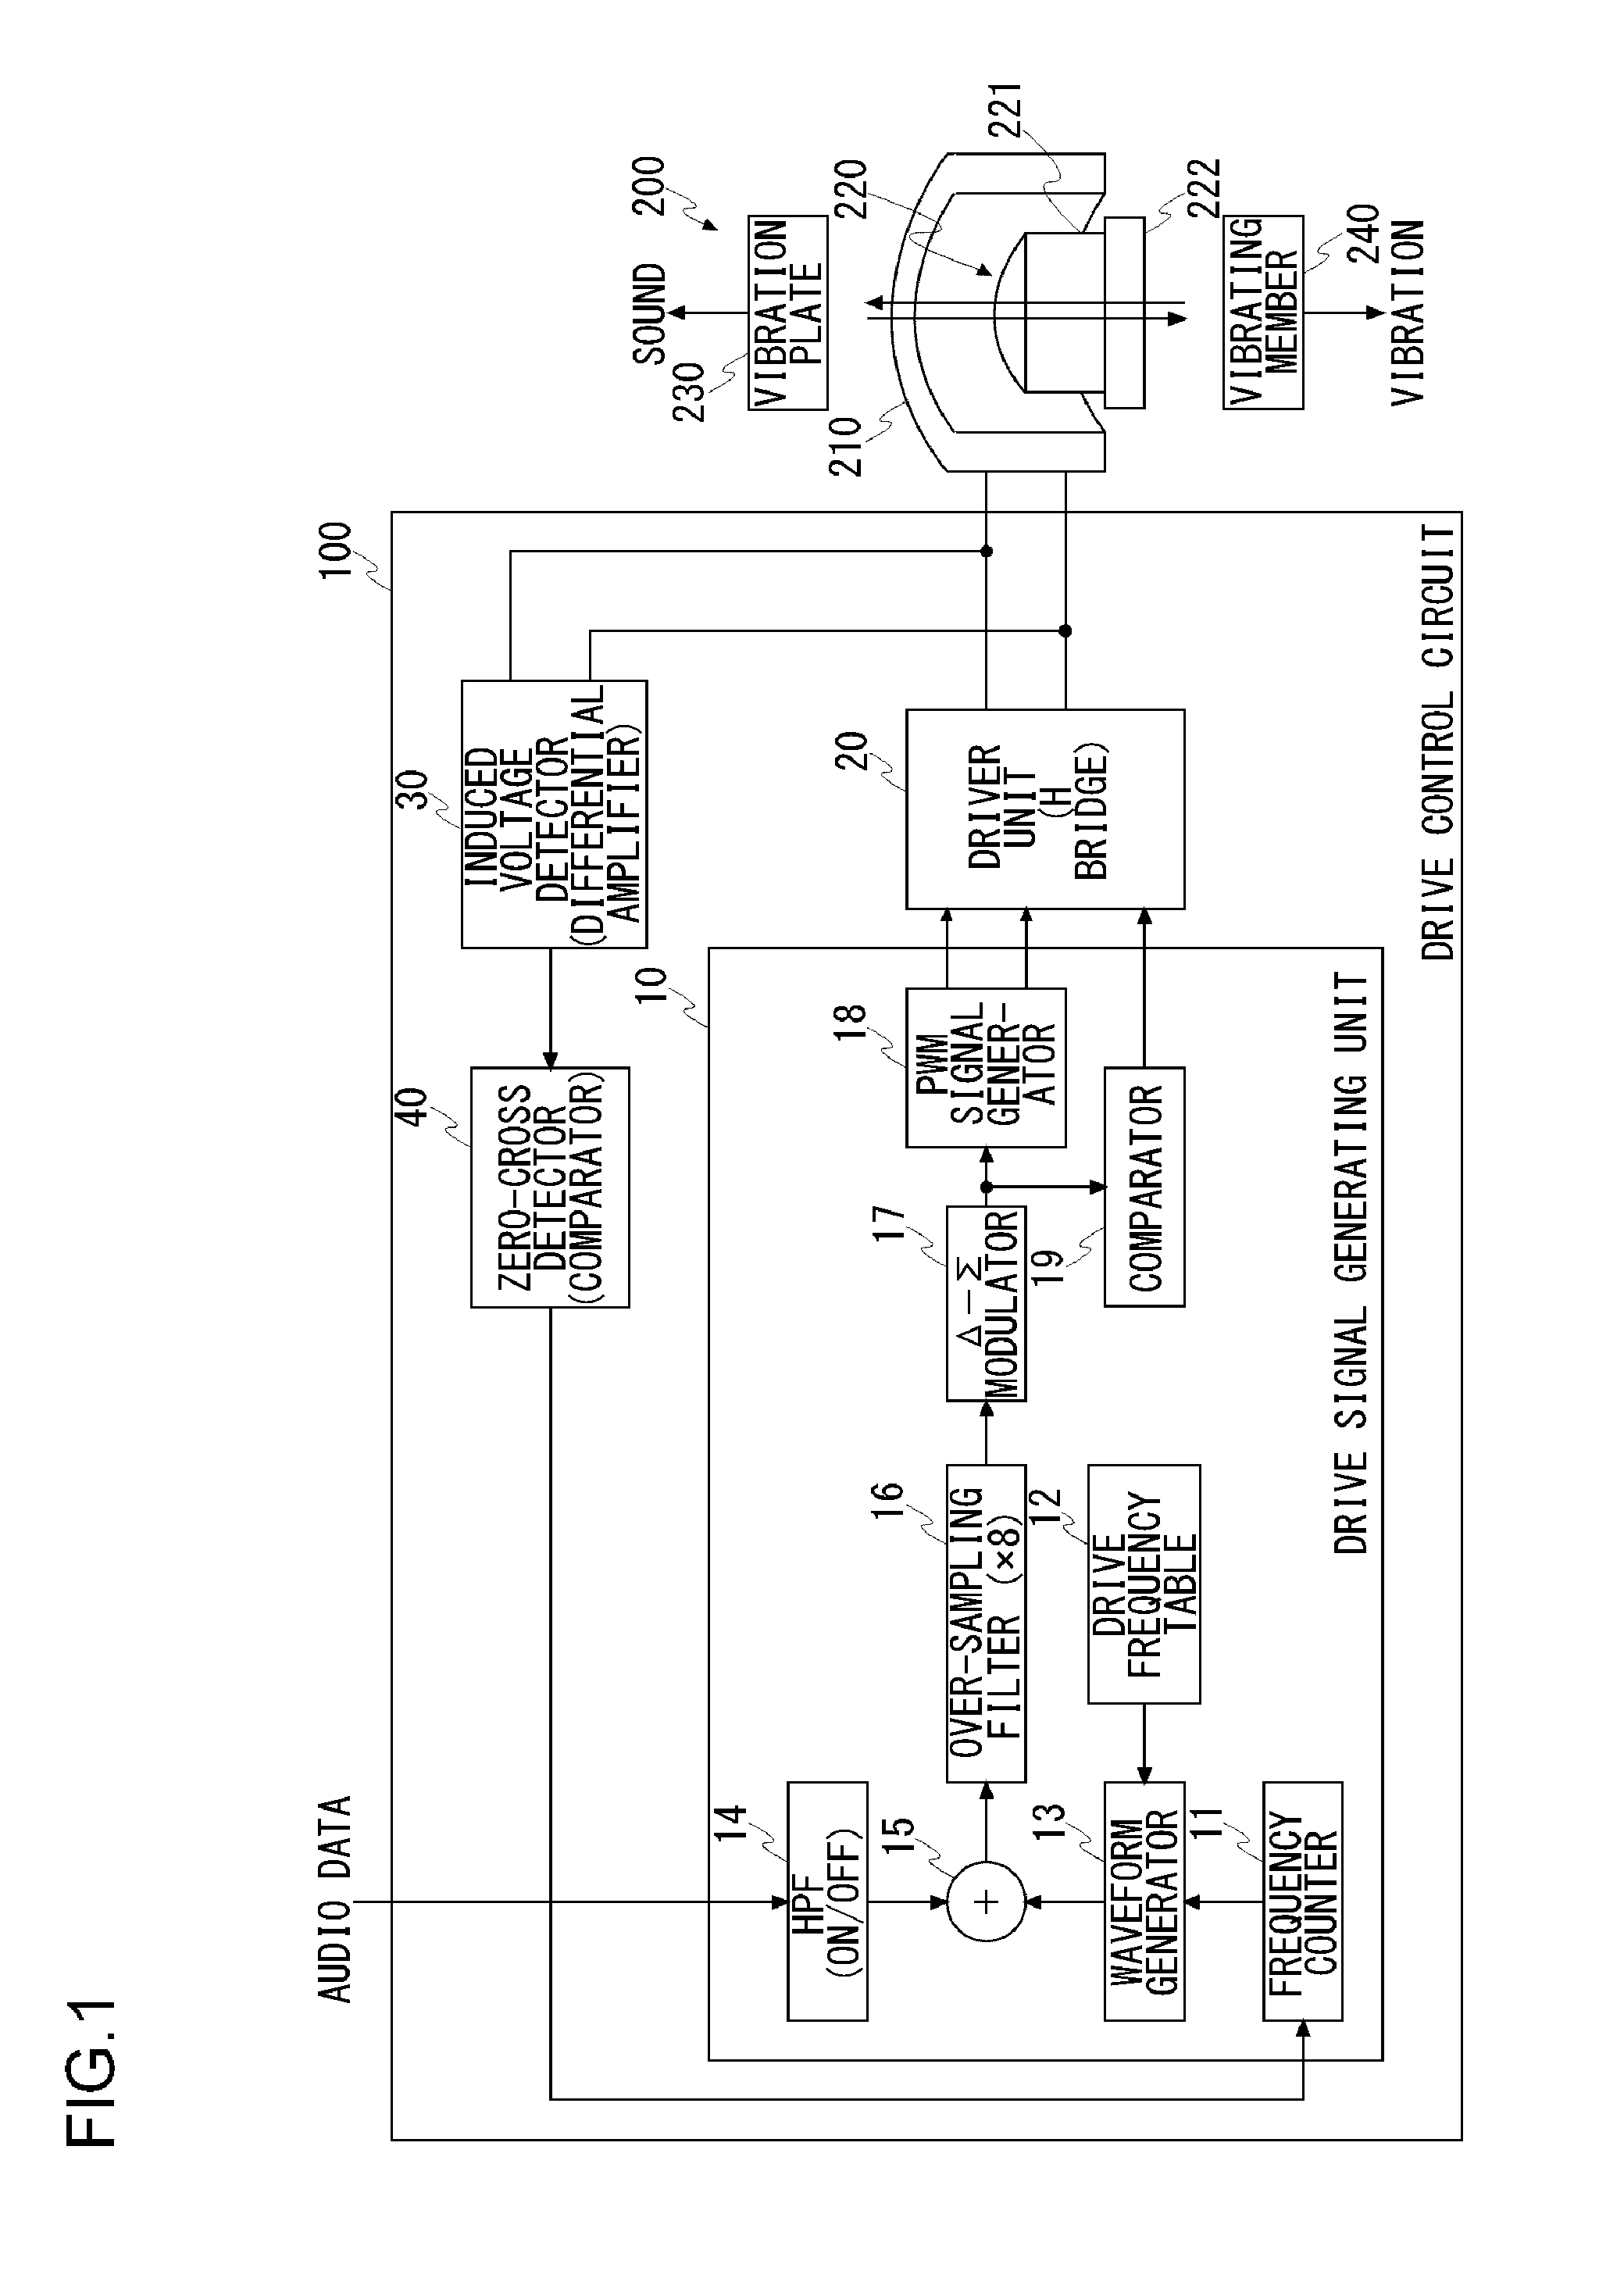 Drive control circuit for vibration speaker